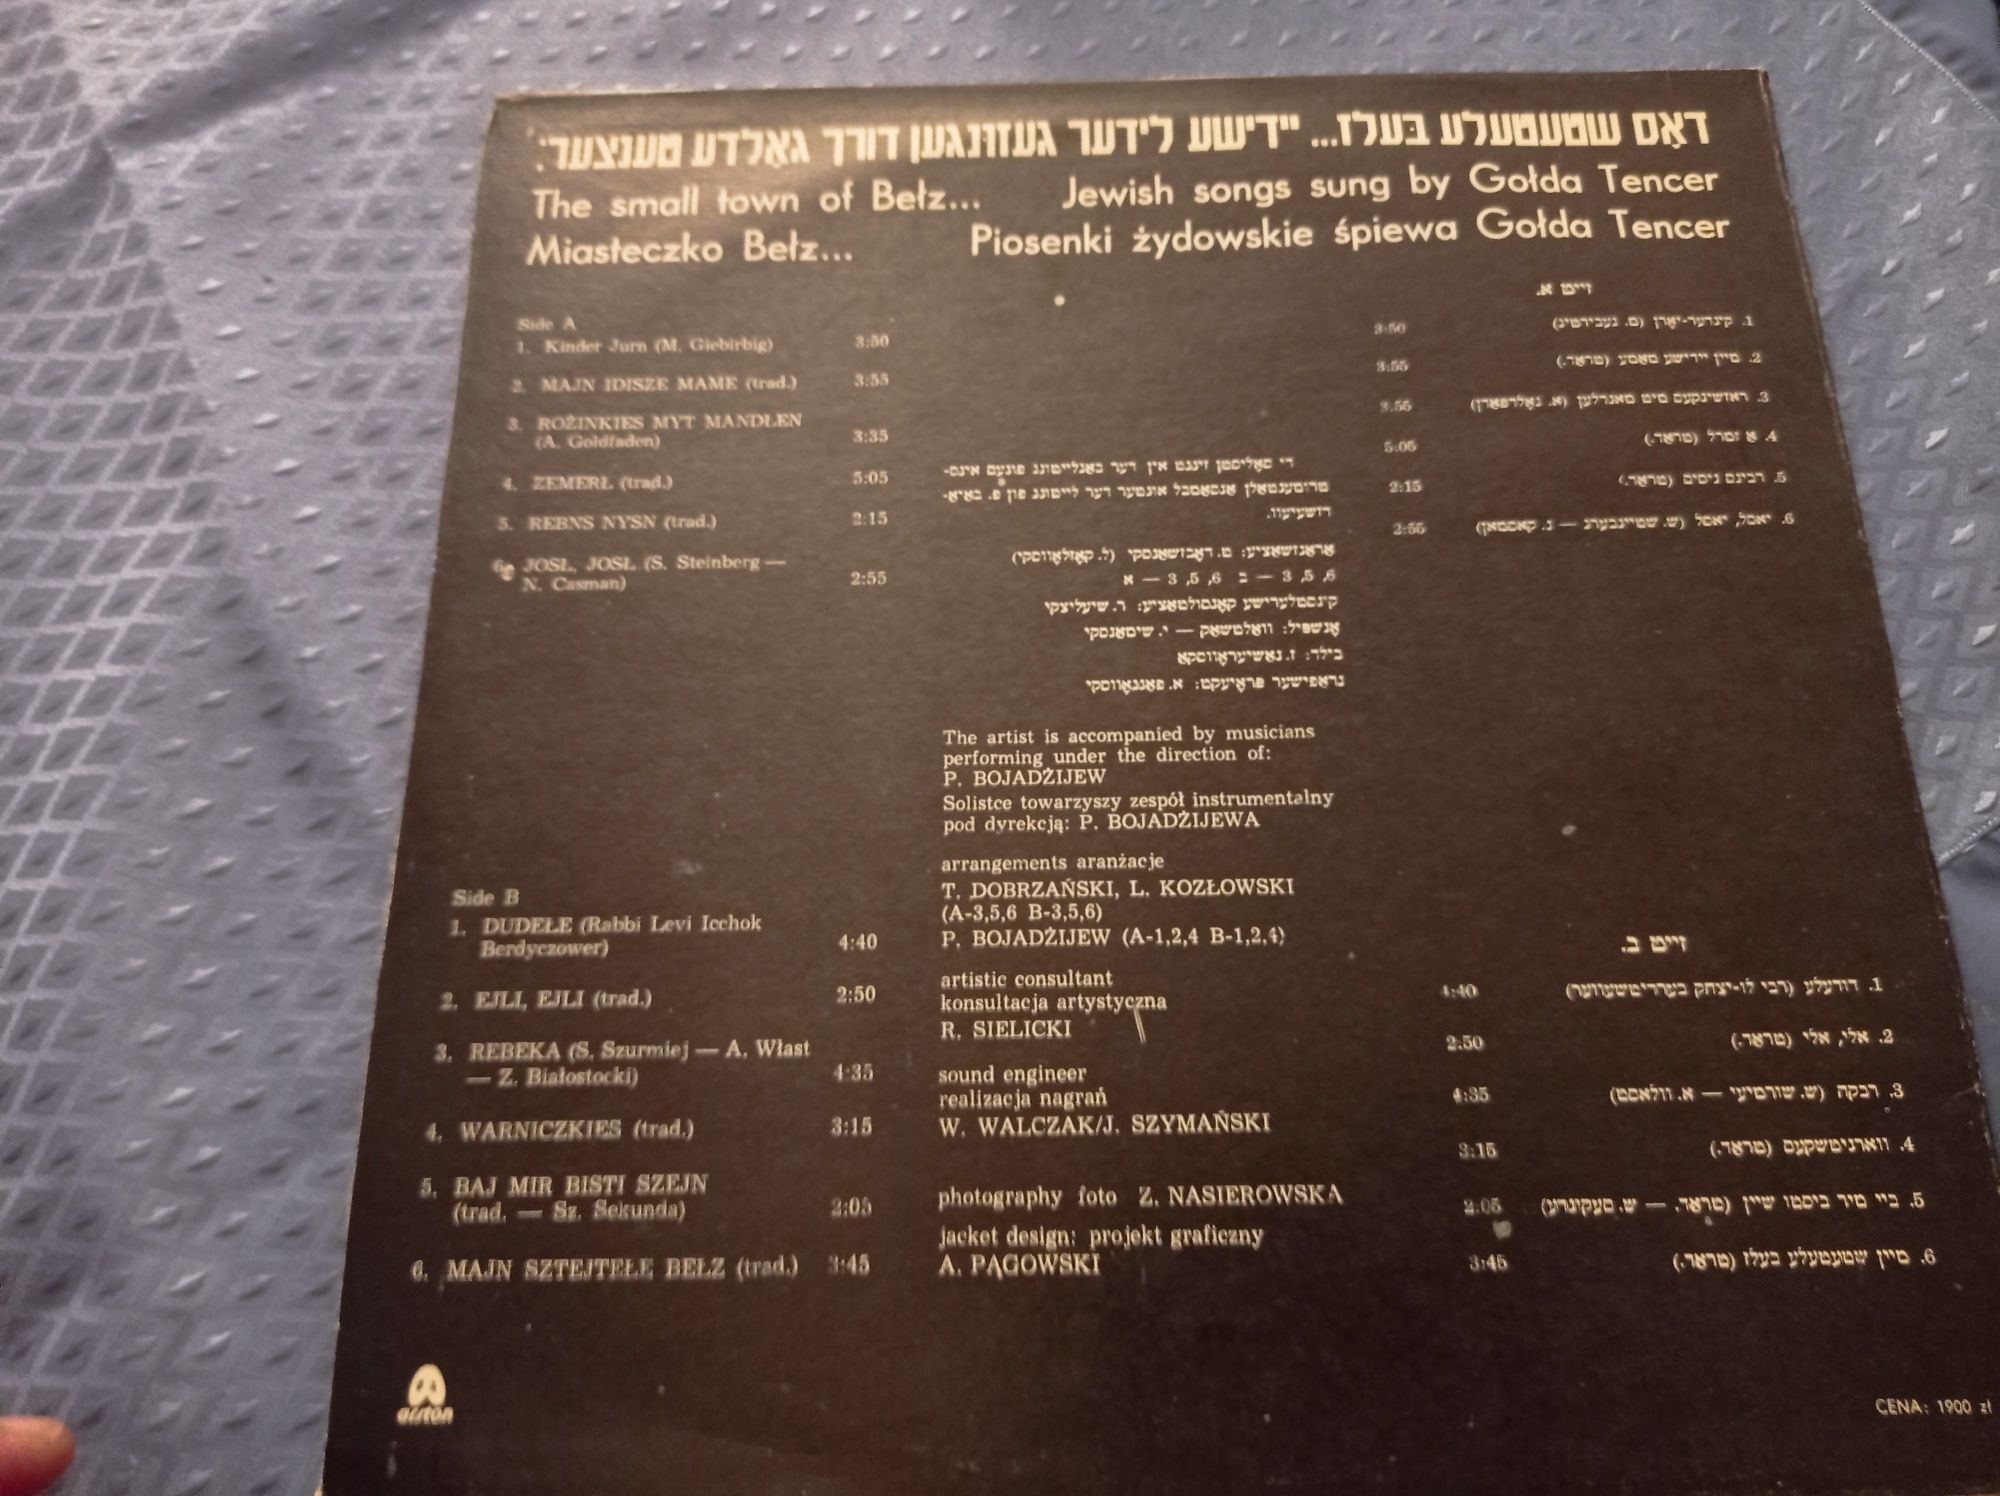 Jewish songs sung by Gołda Tencer